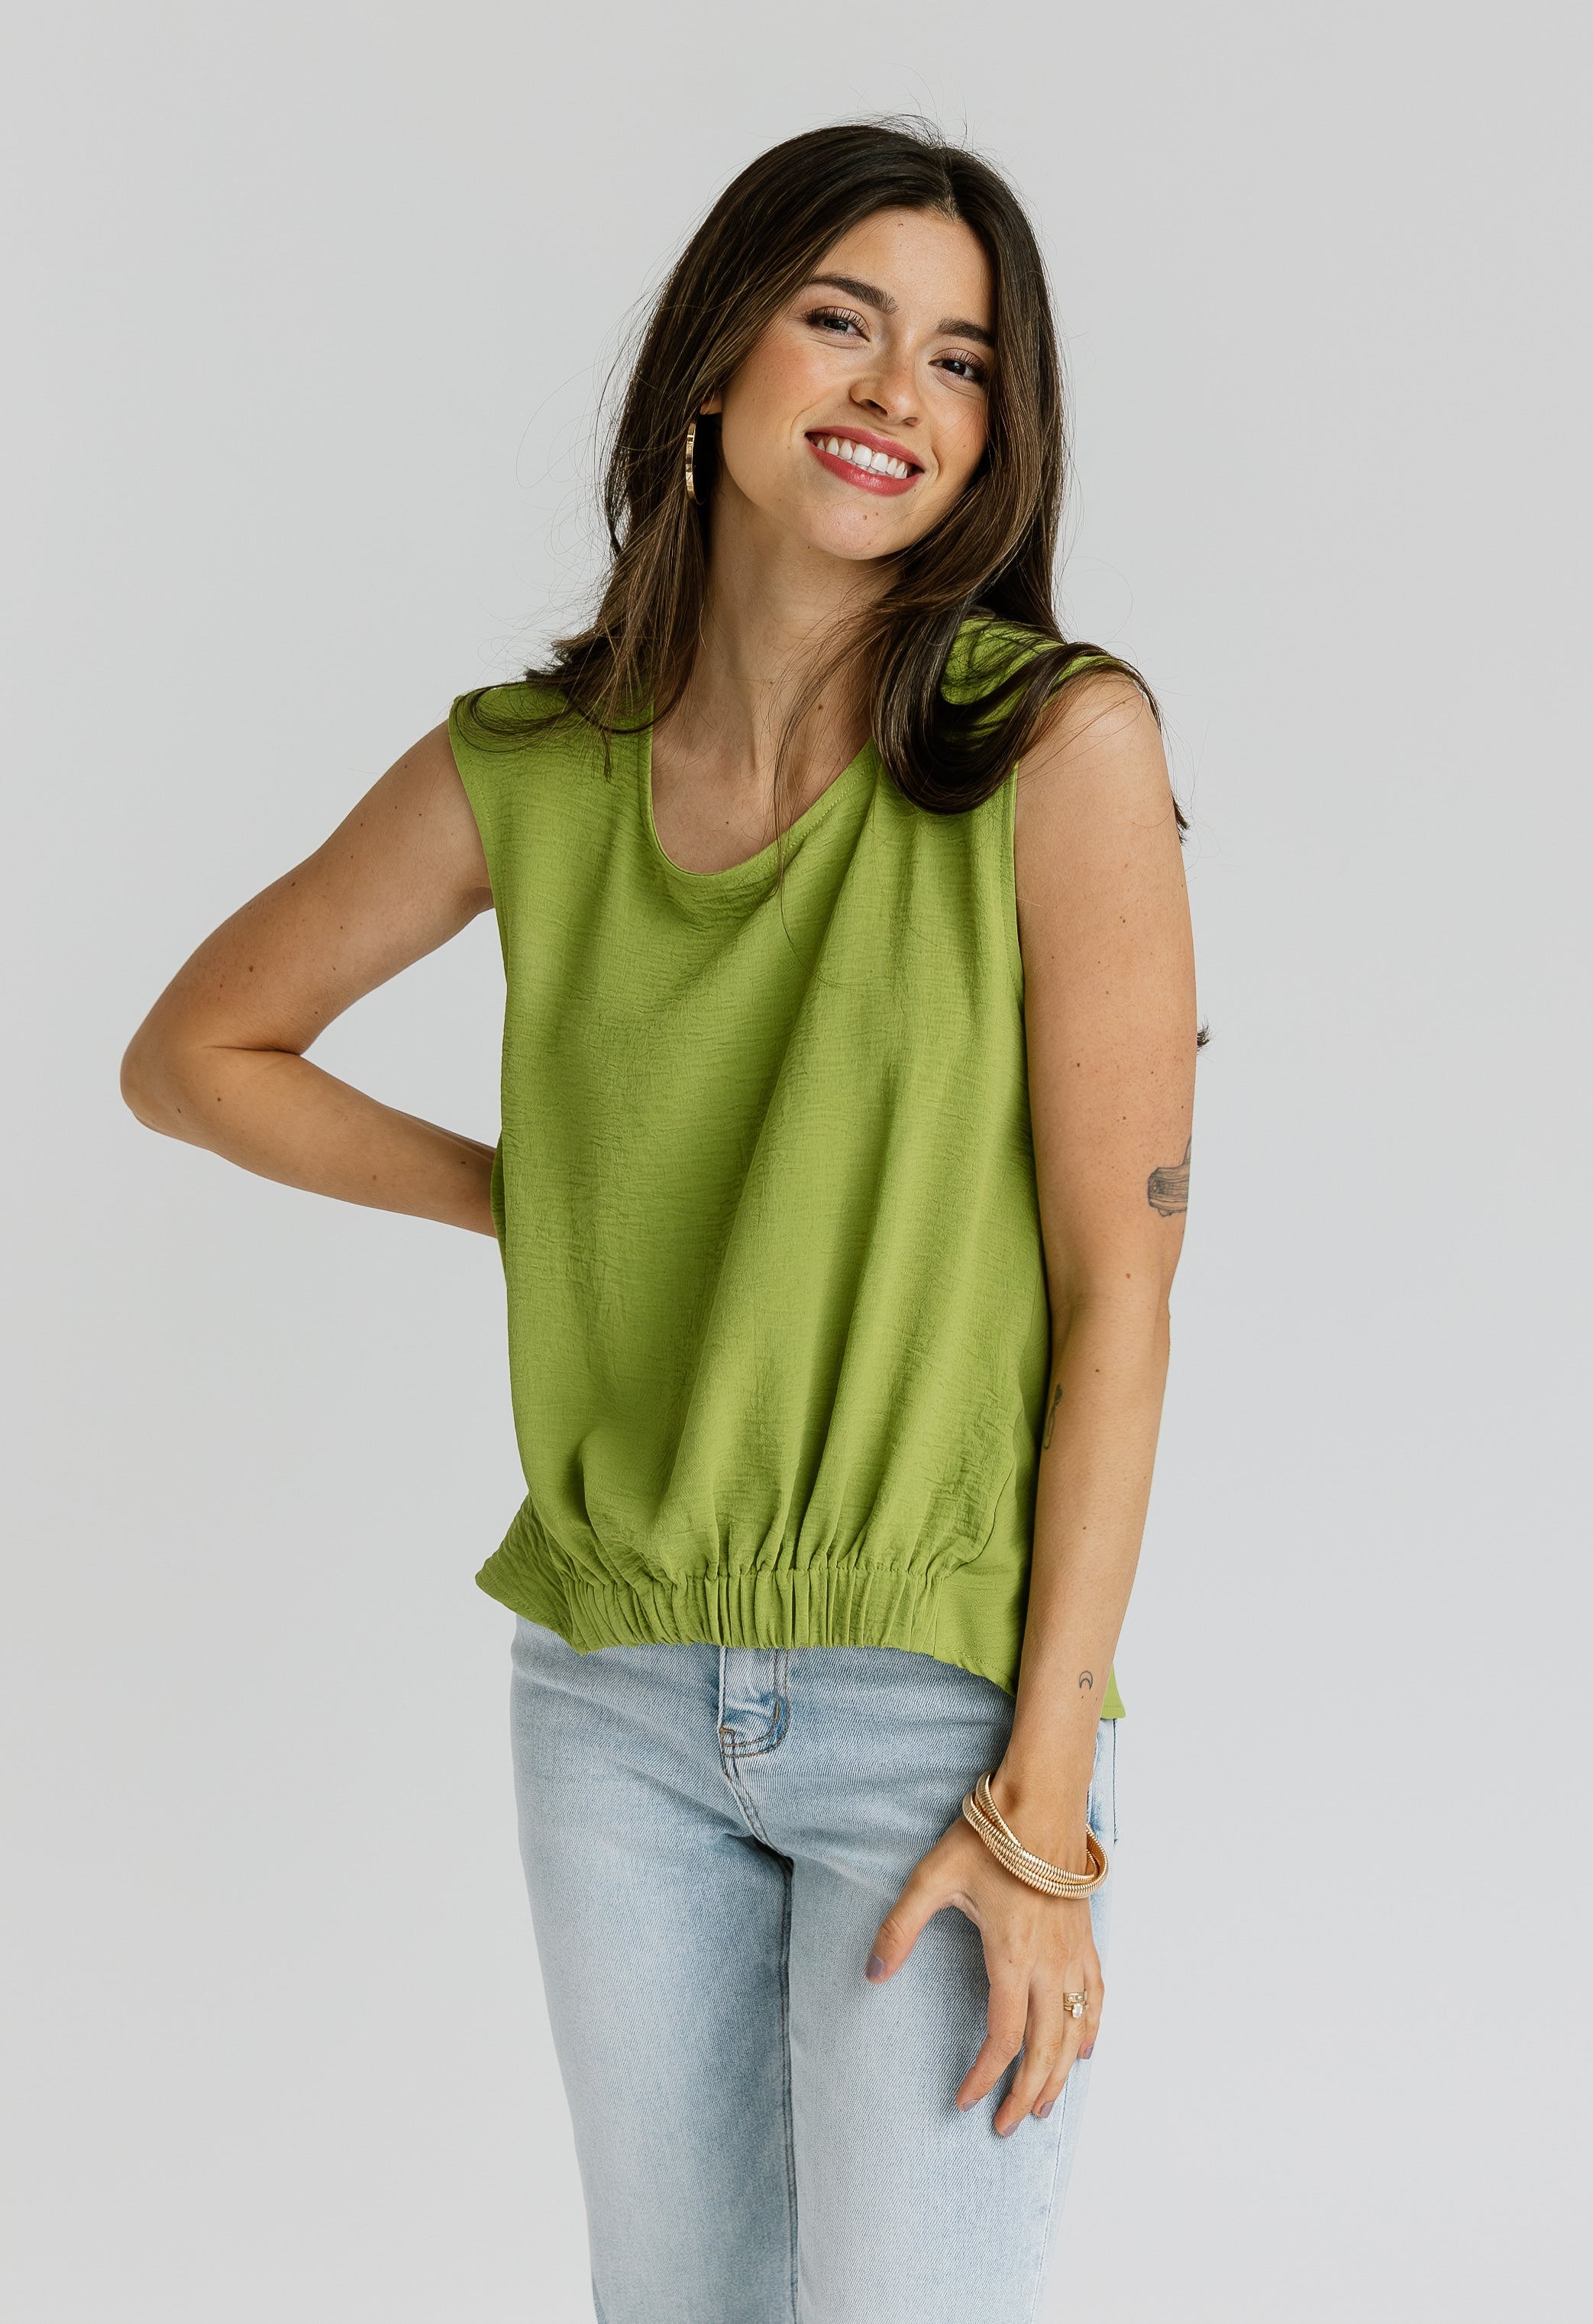 Sloane Tank - AVOCADO - willows clothing TANK